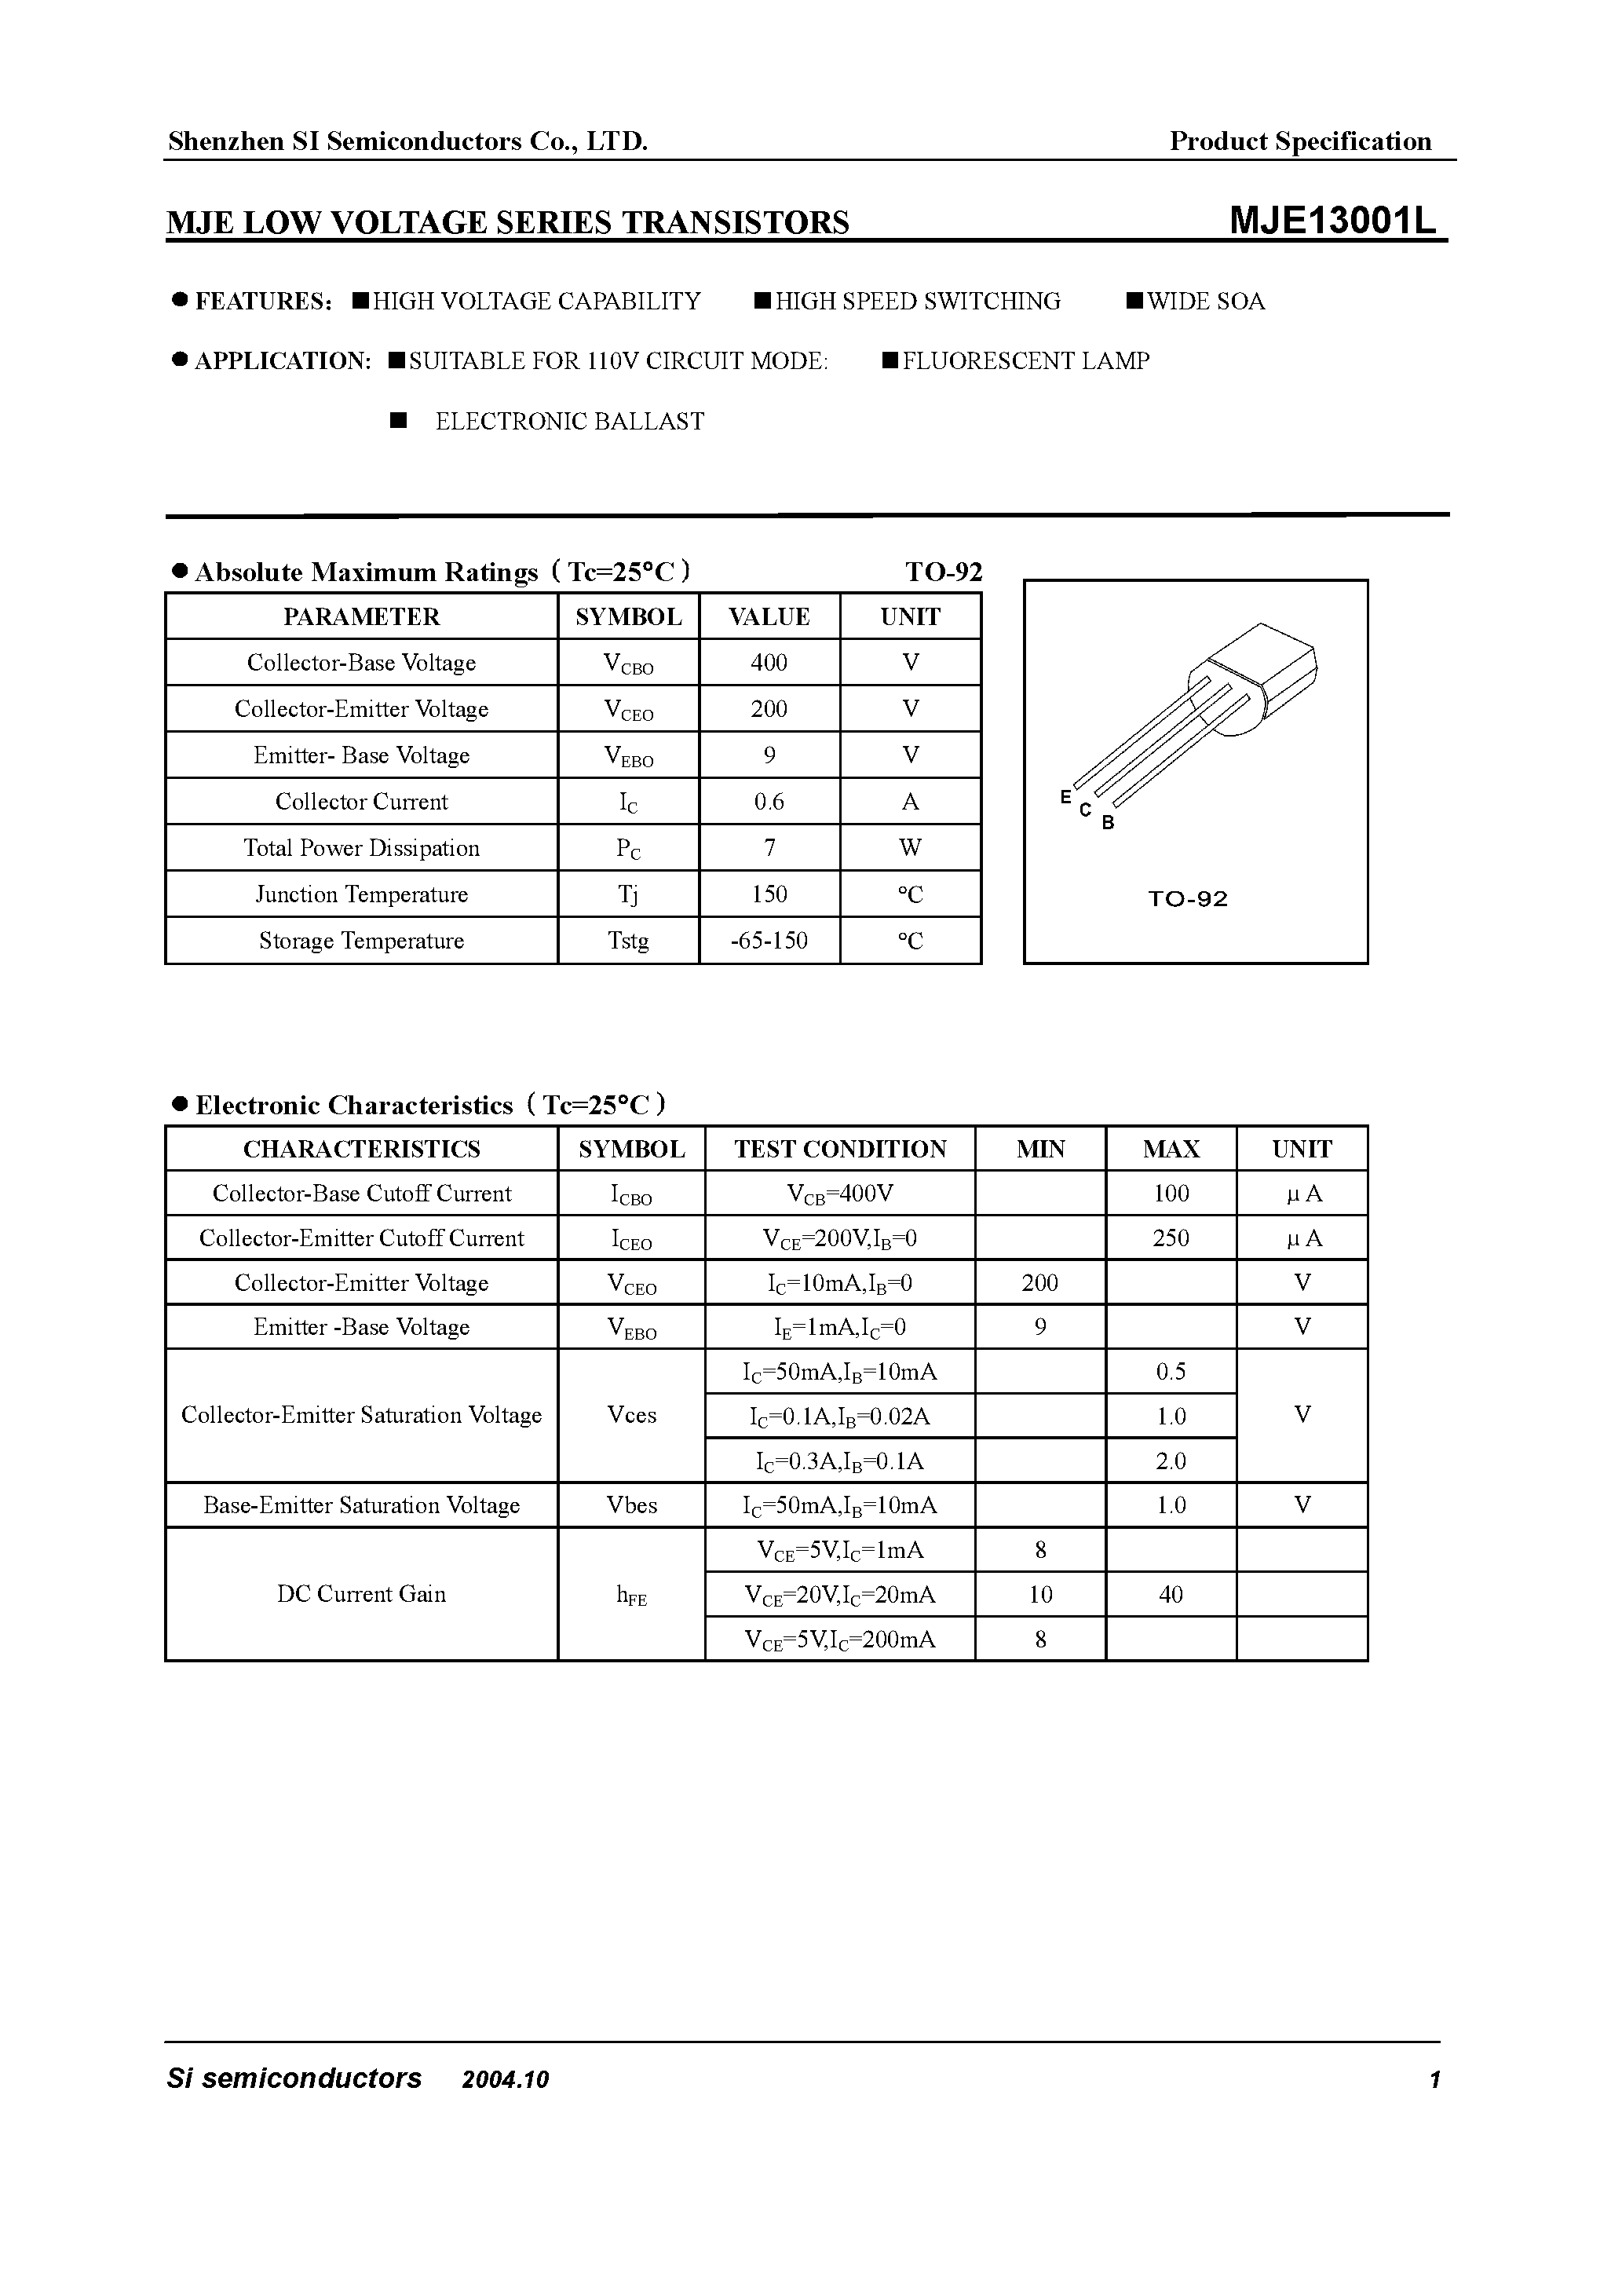 Даташит HMJE13001L - MJE Series Transistors страница 1